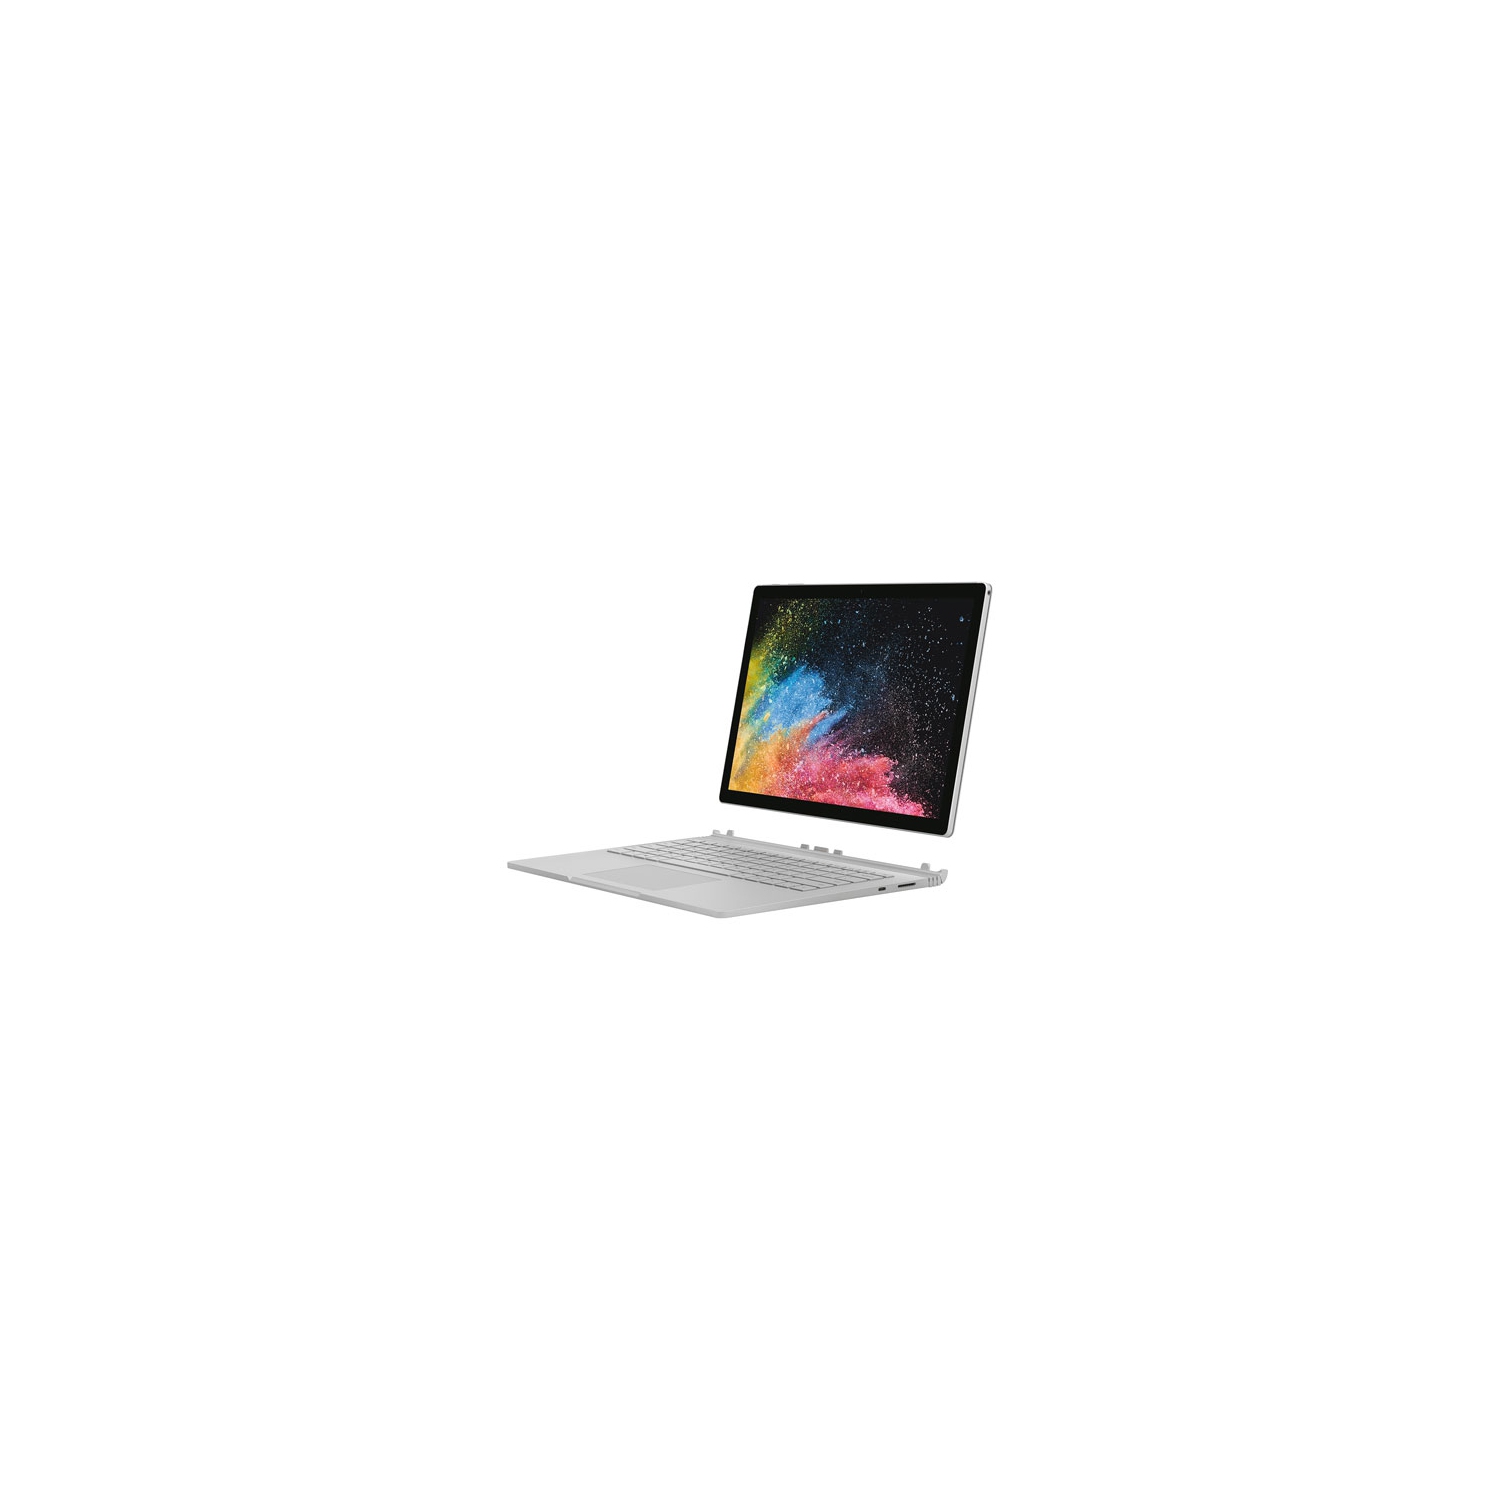 Microsoft Surface Book 2 HN4-00002 13.5” Touchscreen Laptop with Intel® i7-8650U, 256GB SSD, 8GB RAM, NVIDIA GTX 1050 & Windows 10 Pro - French - New